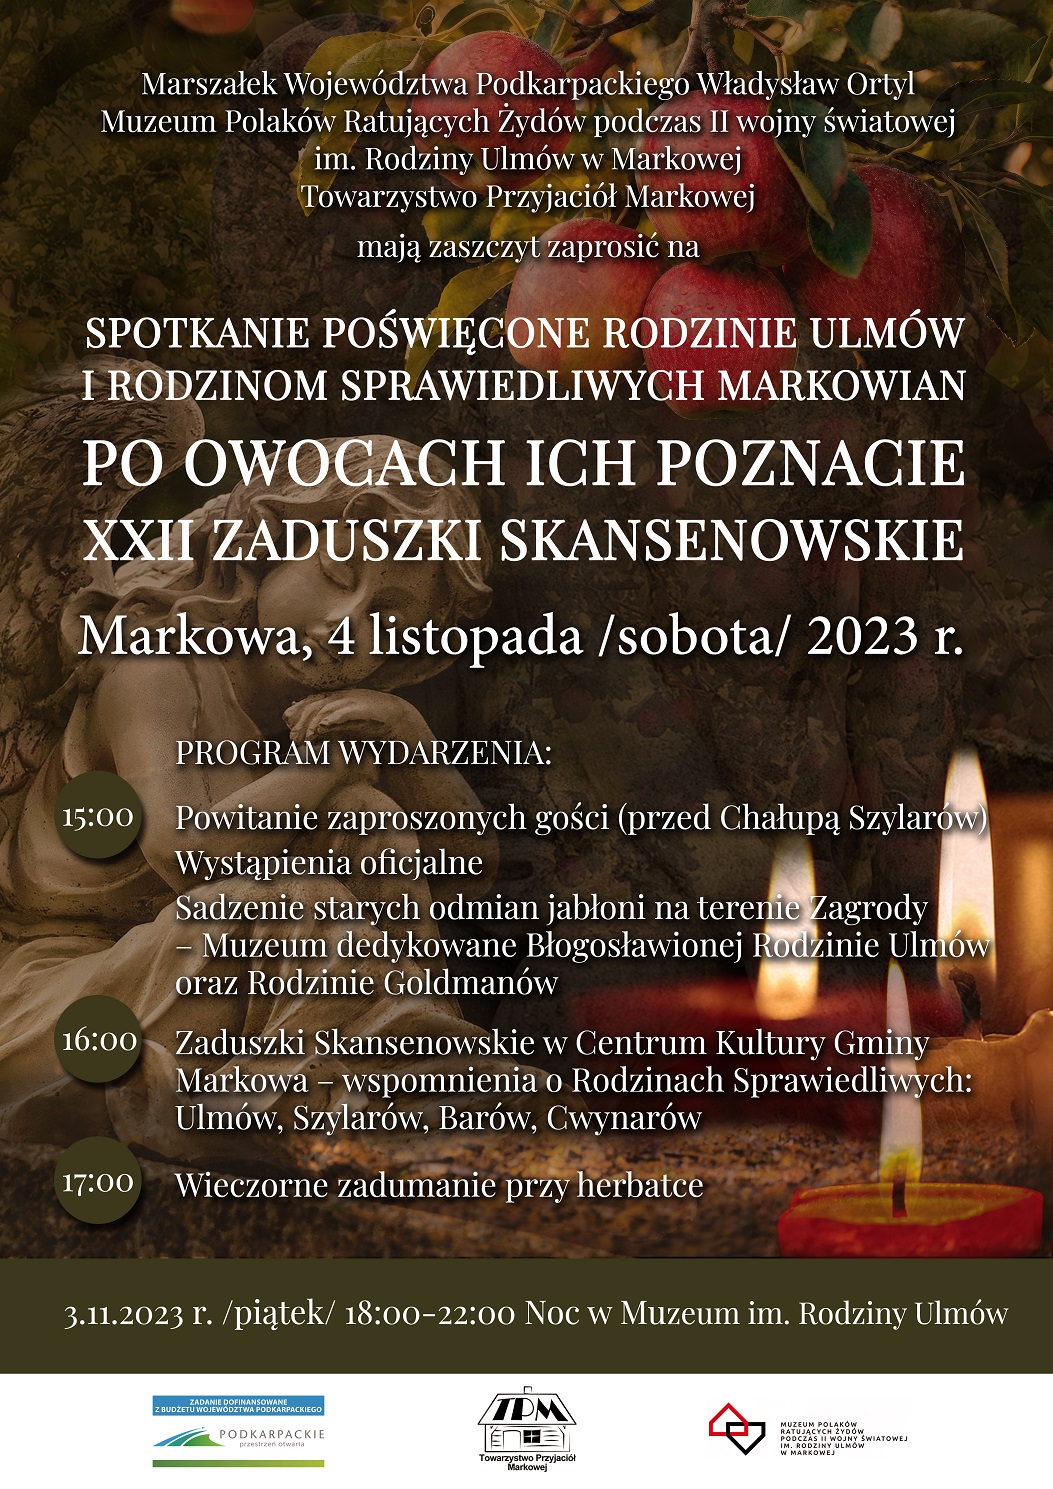 Zaduszki Skansenowskie 2023 (4)_1